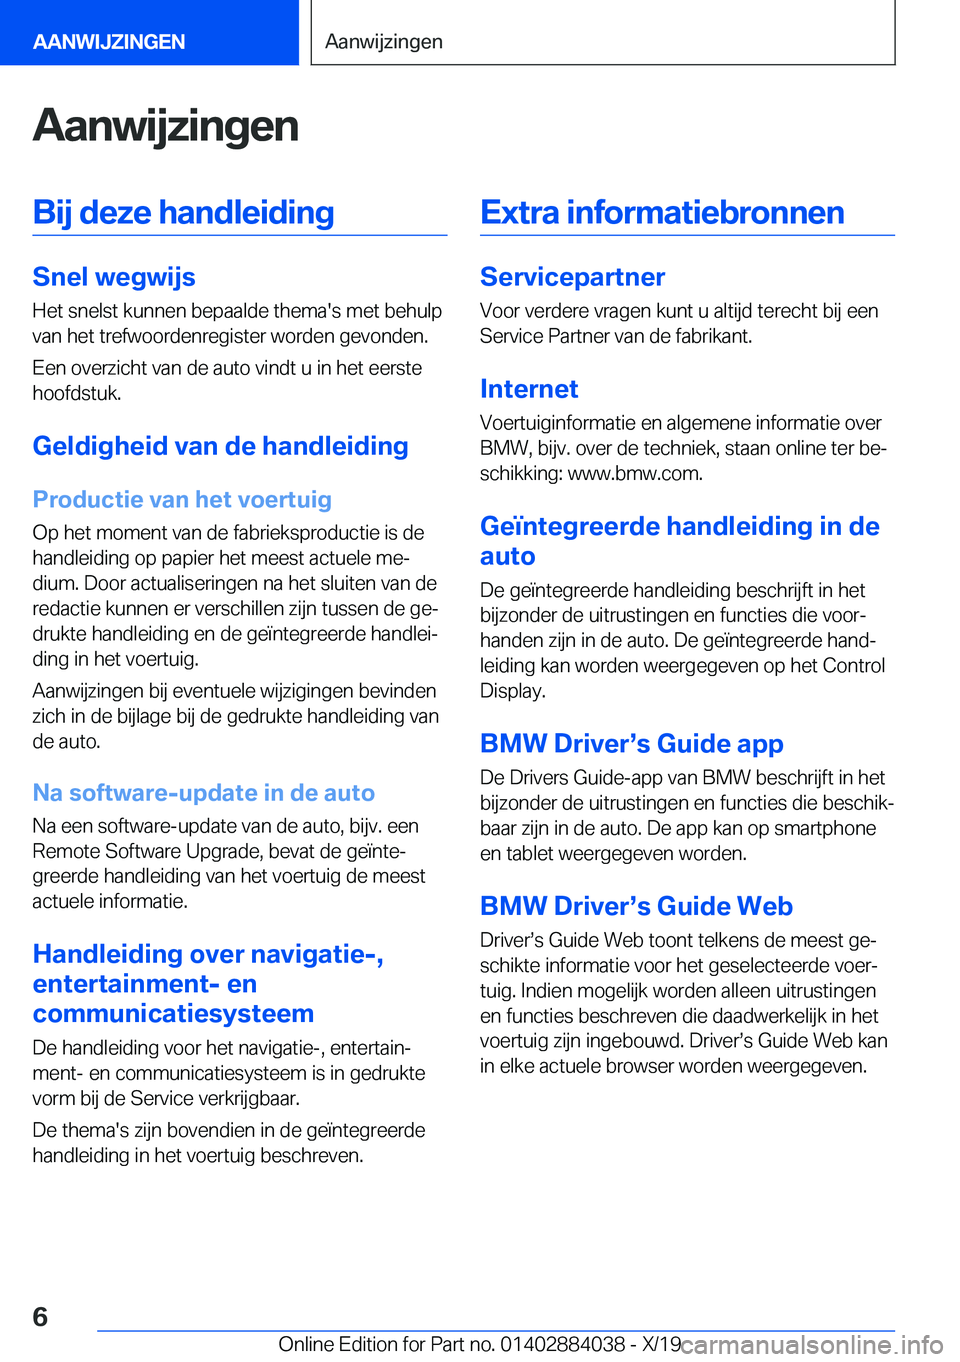 BMW 7 SERIES 2020  Instructieboekjes (in Dutch) �A�a�n�w�i�j�z�i�n�g�e�n�B�i�j��d�e�z�e��h�a�n�d�l�e�i�d�i�n�g
�S�n�e�l��w�e�g�w�i�j�s
�H�e�t��s�n�e�l�s�t��k�u�n�n�e�n��b�e�p�a�a�l�d�e��t�h�e�m�a�'�s��m�e�t��b�e�h�u�l�p
�v�a�n��h�e�t�